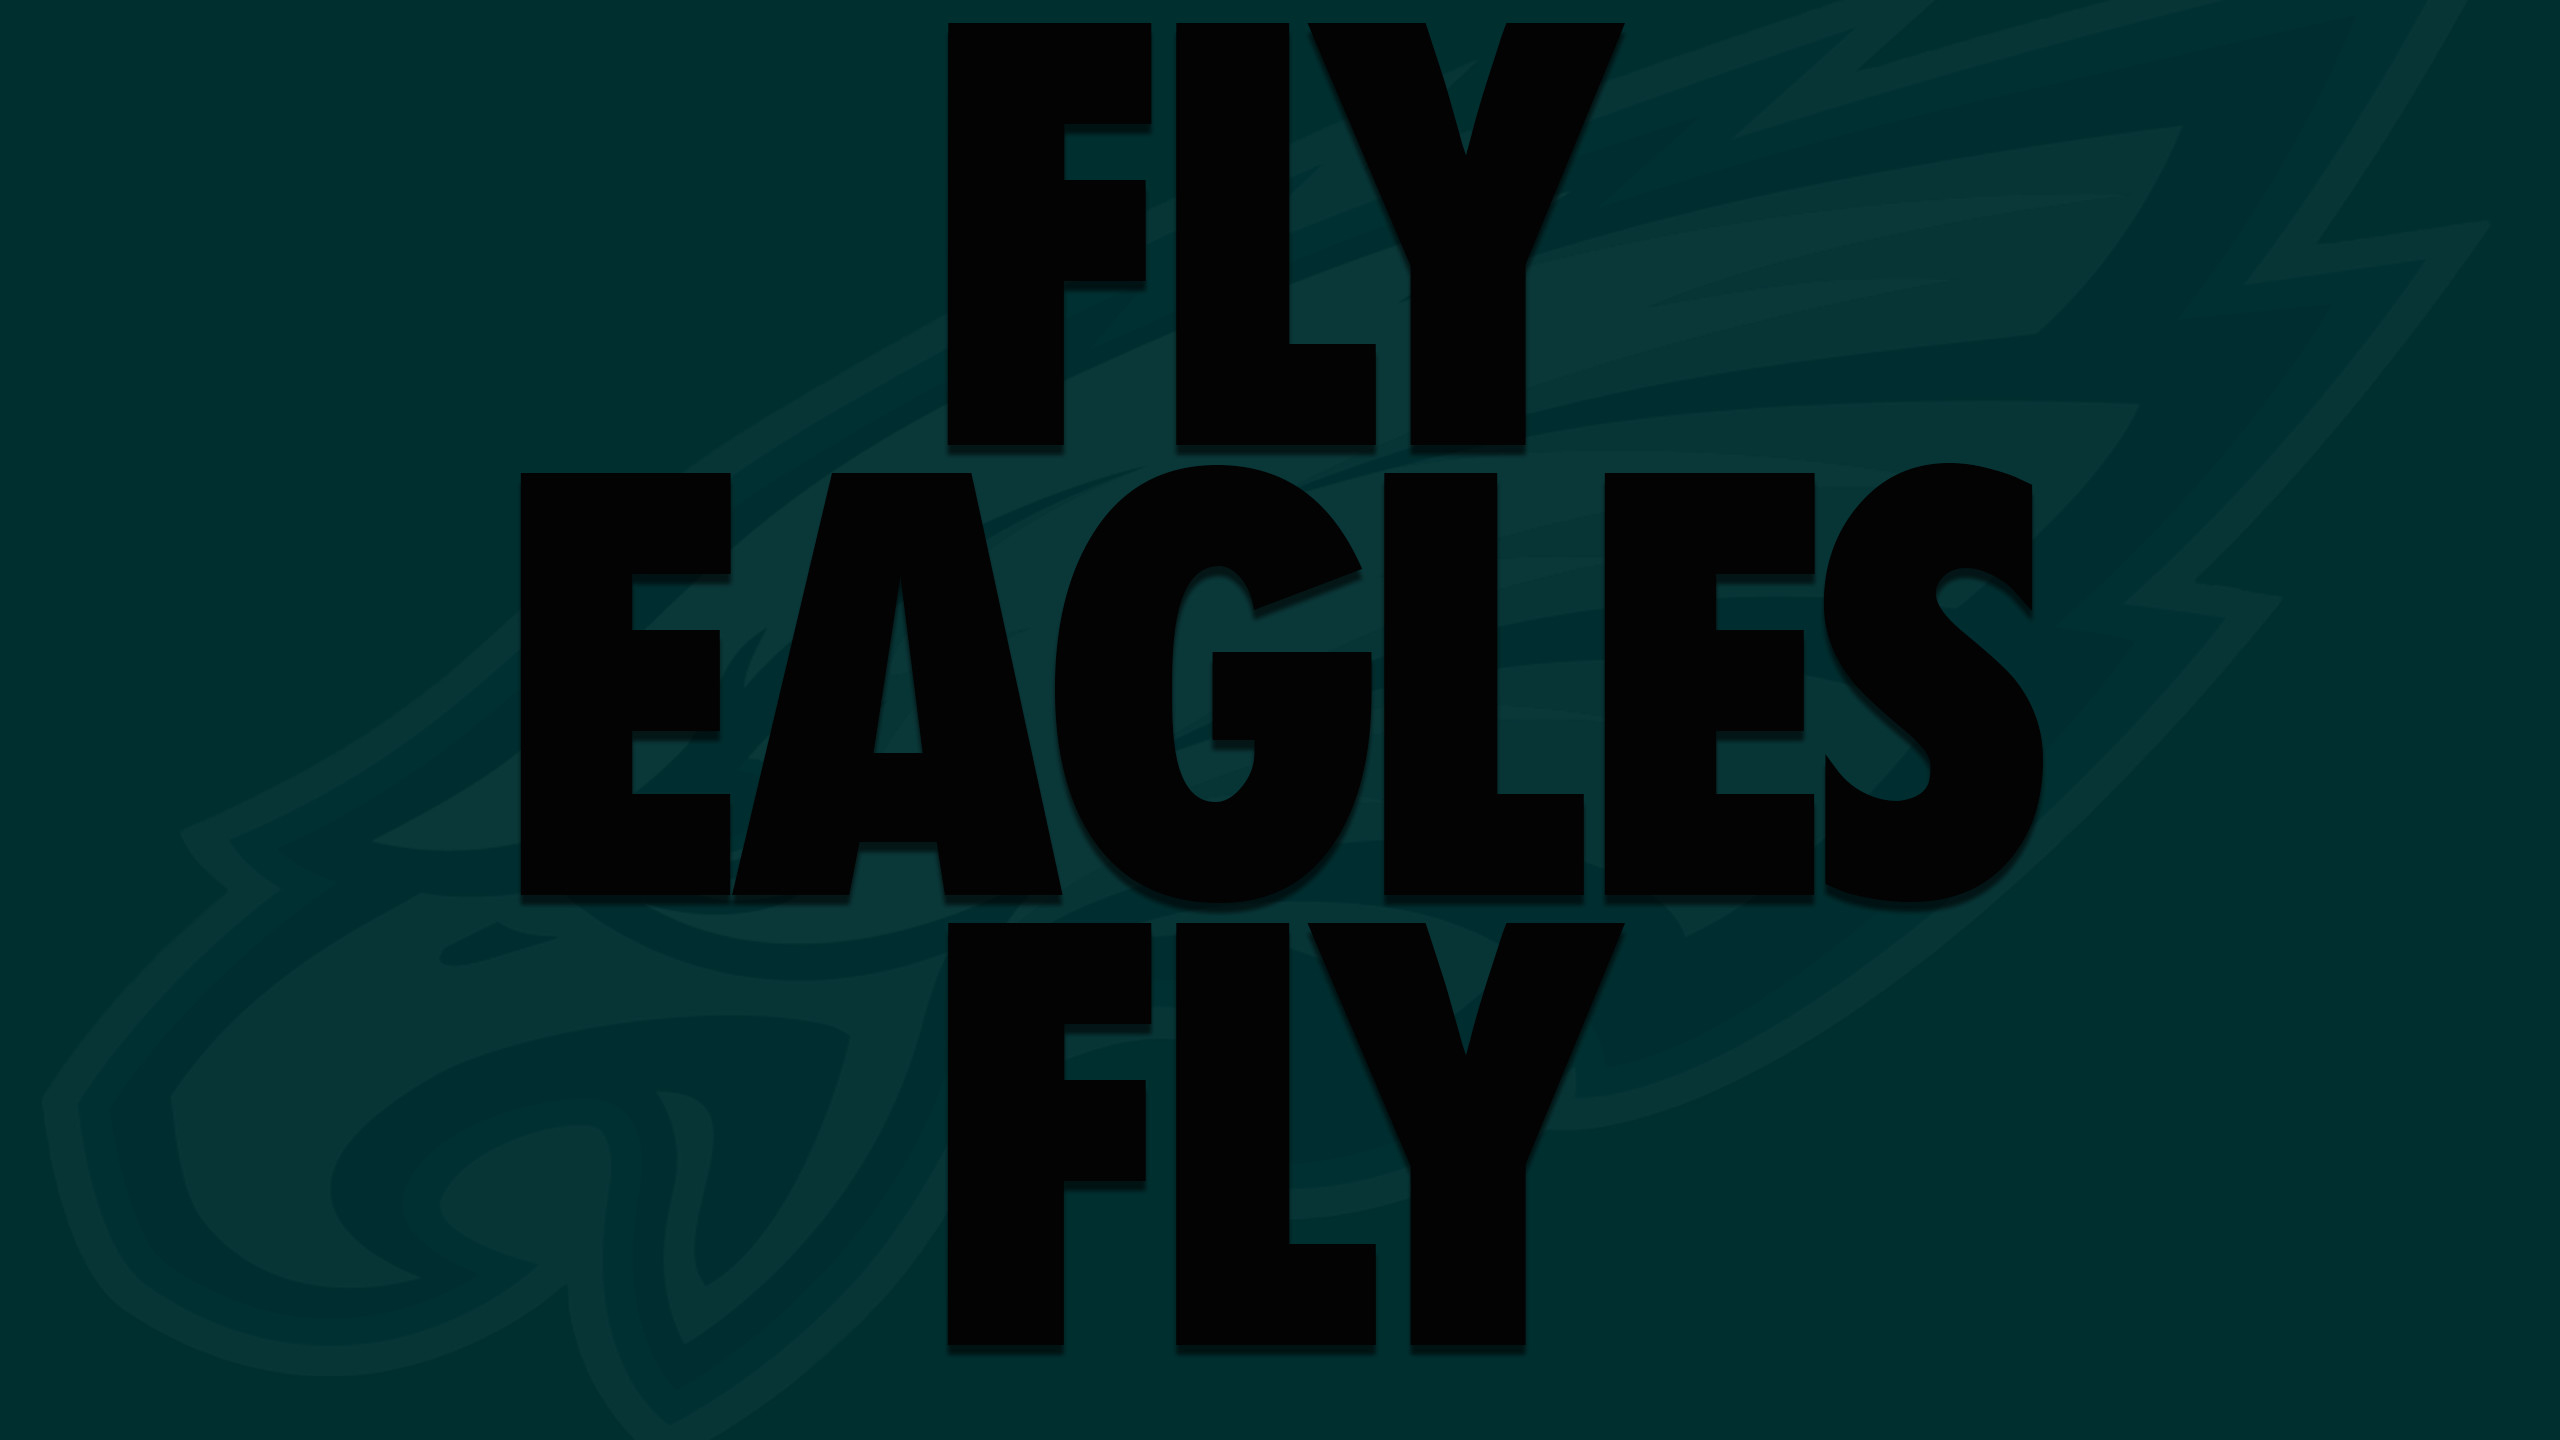 2560x1440 Philadelphia Eagles 2018 Schedule Wallpaper (54+ pictures